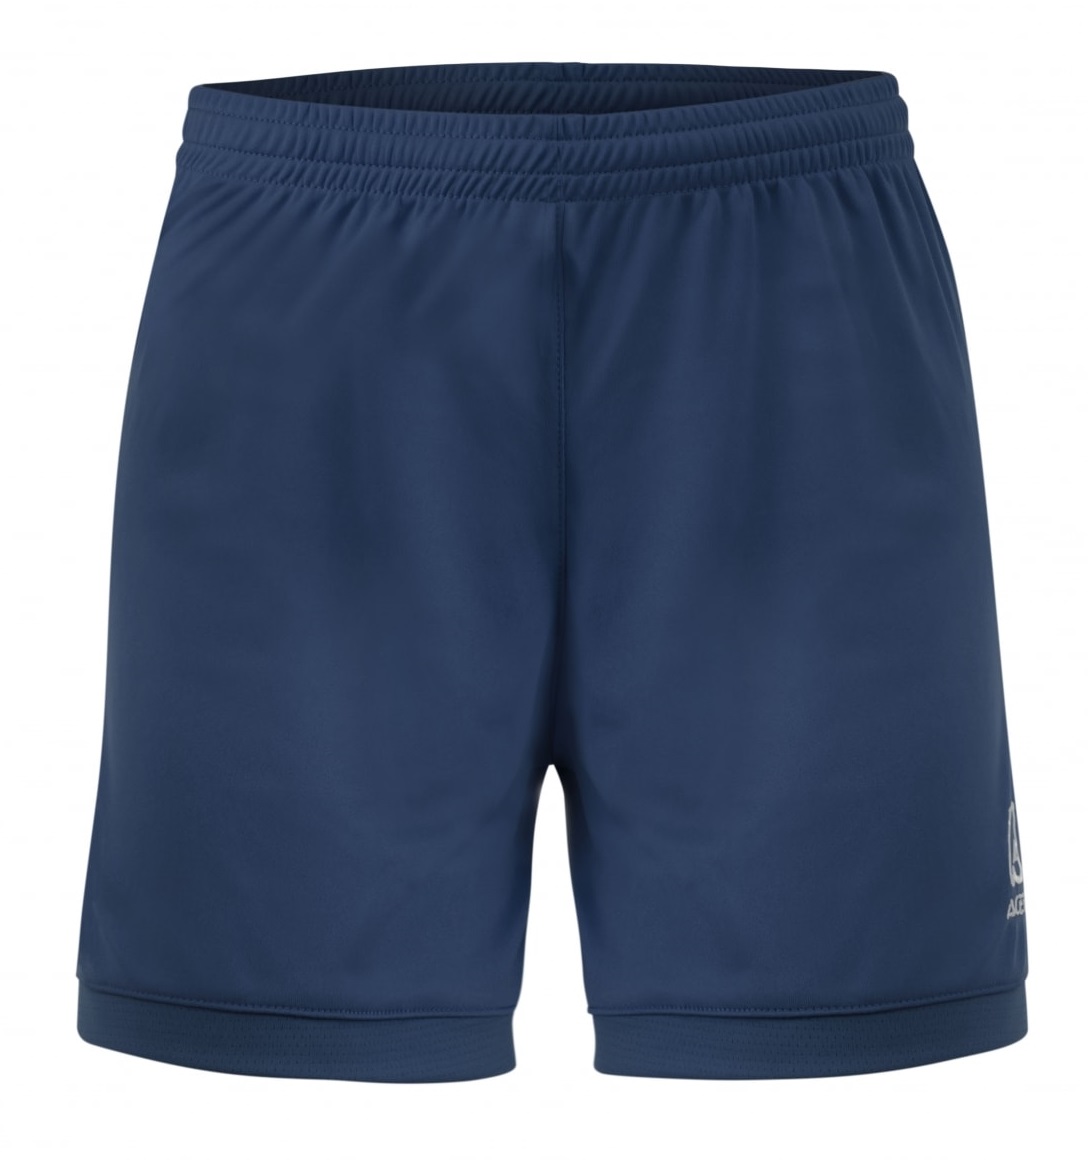 Objetado directorio Espolvorear Pantalones cortos azules deporte | Sprinter